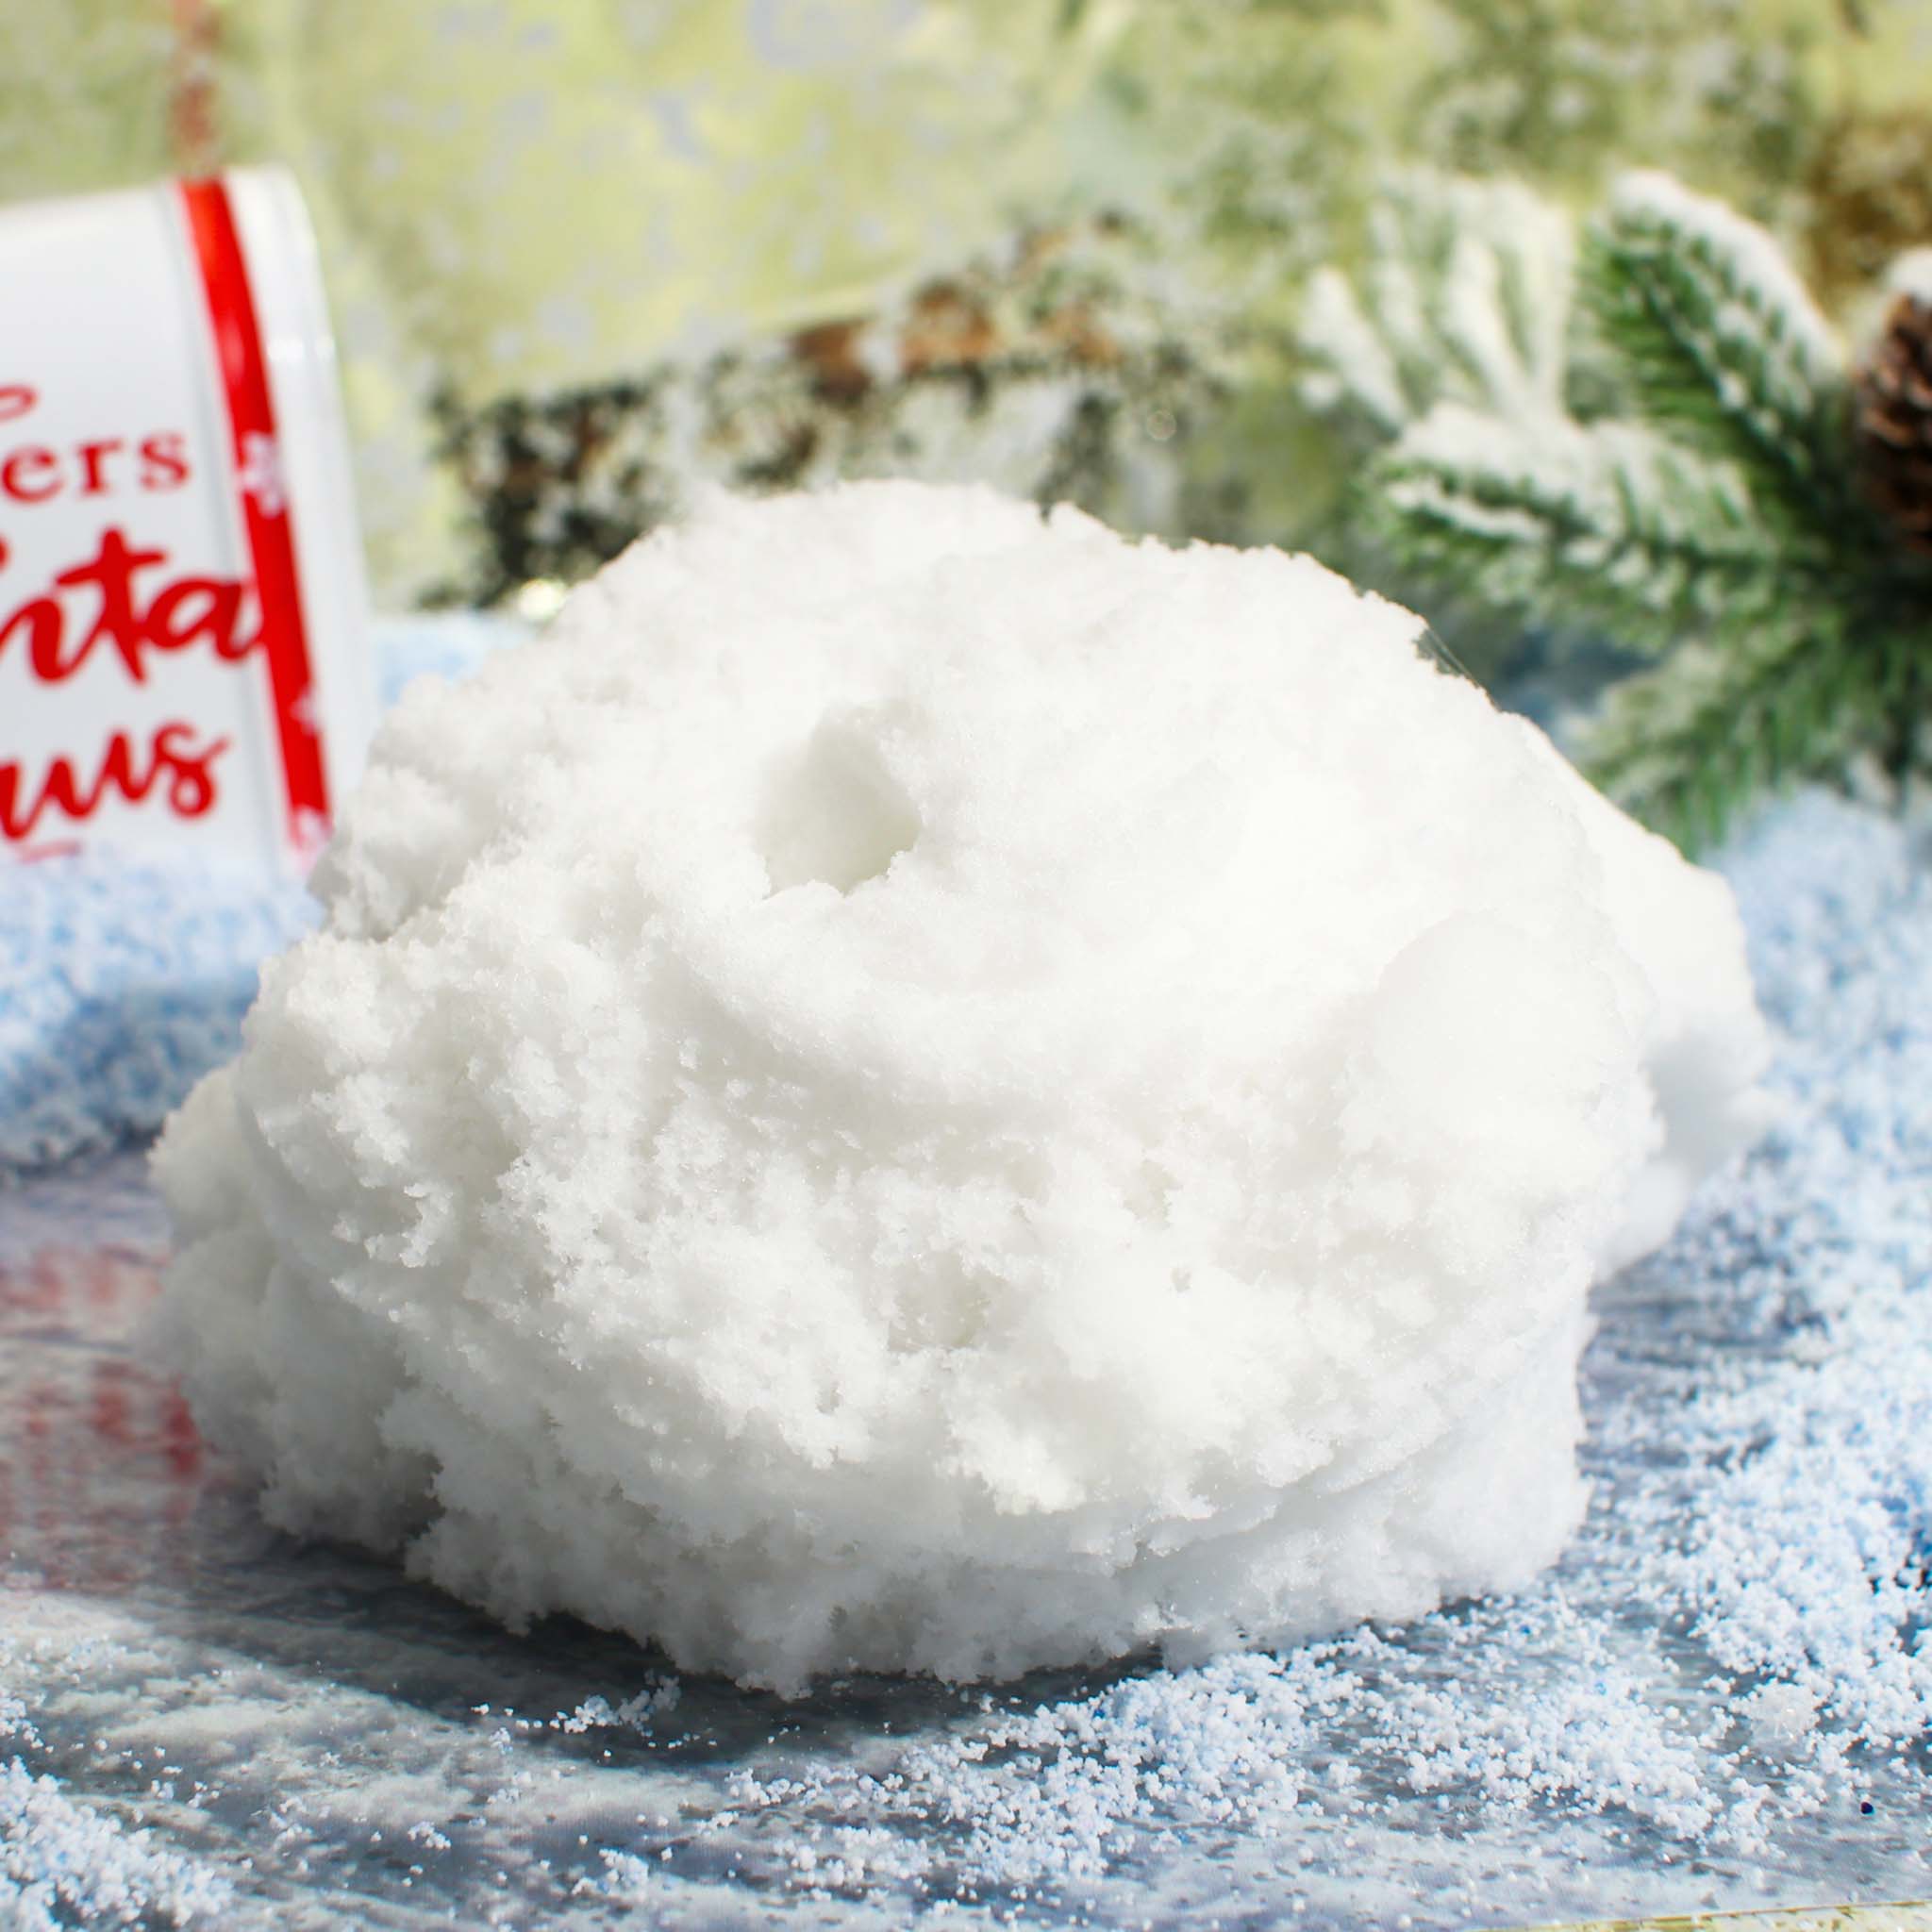 Iscream 14-Piece Build Your Own Snowman Kit - White